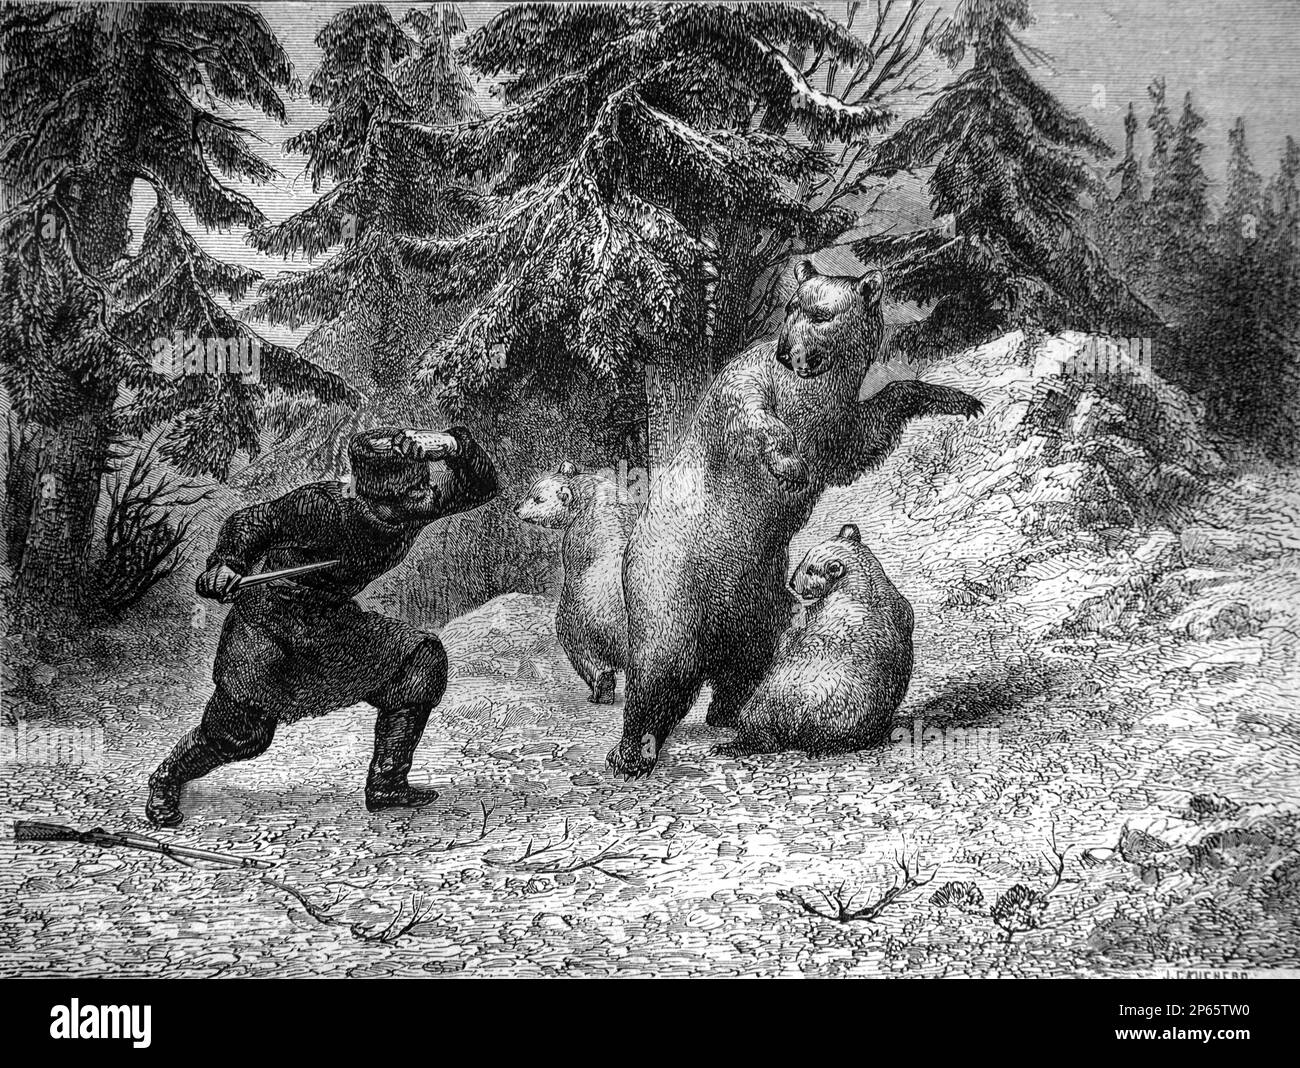 Siberian Hunter Attacking Brown Bears, Ursus arctos, Siberia Russia. Vintage Engraving or Illustration 1862 Stock Photo